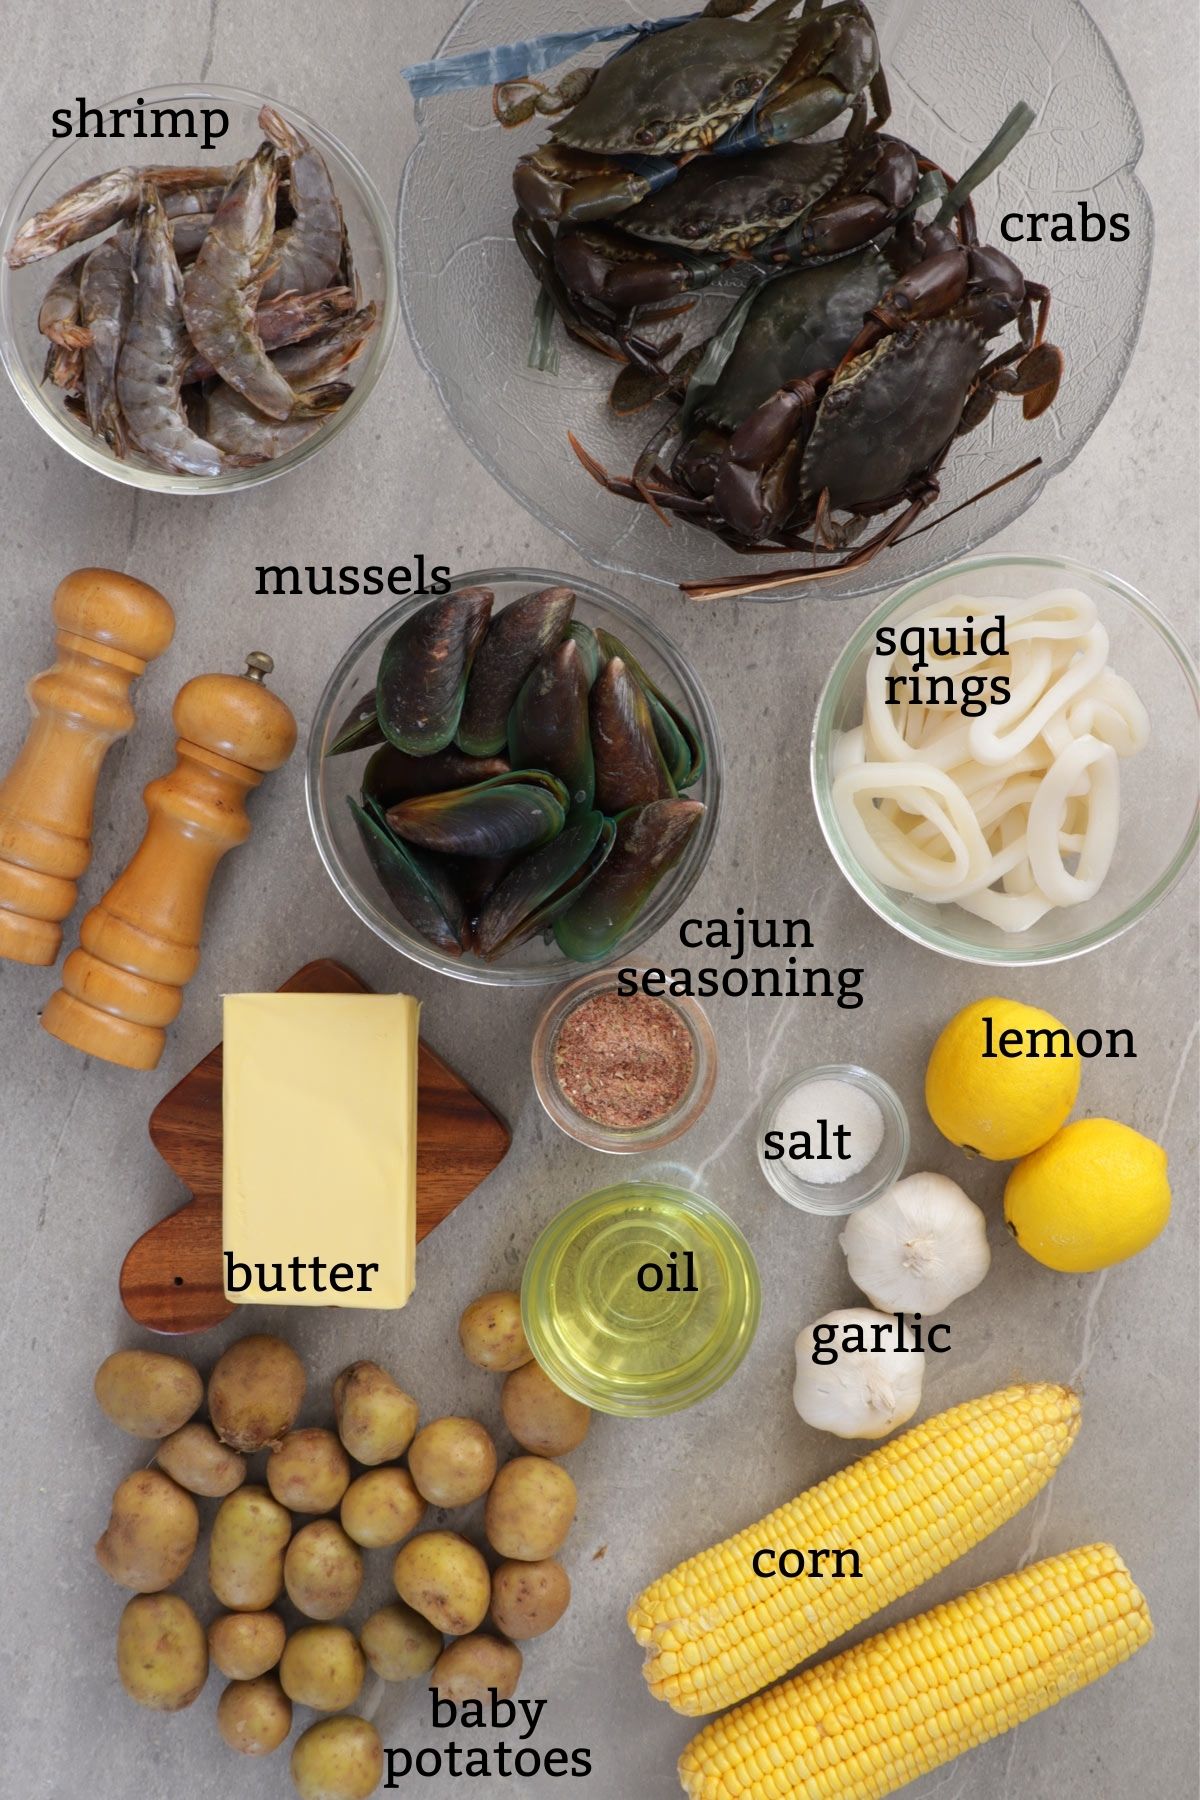 https://www.foxyfolksy.com/wp-content/uploads/2021/04/ingredients-for-cajun-seafood-boil.jpg